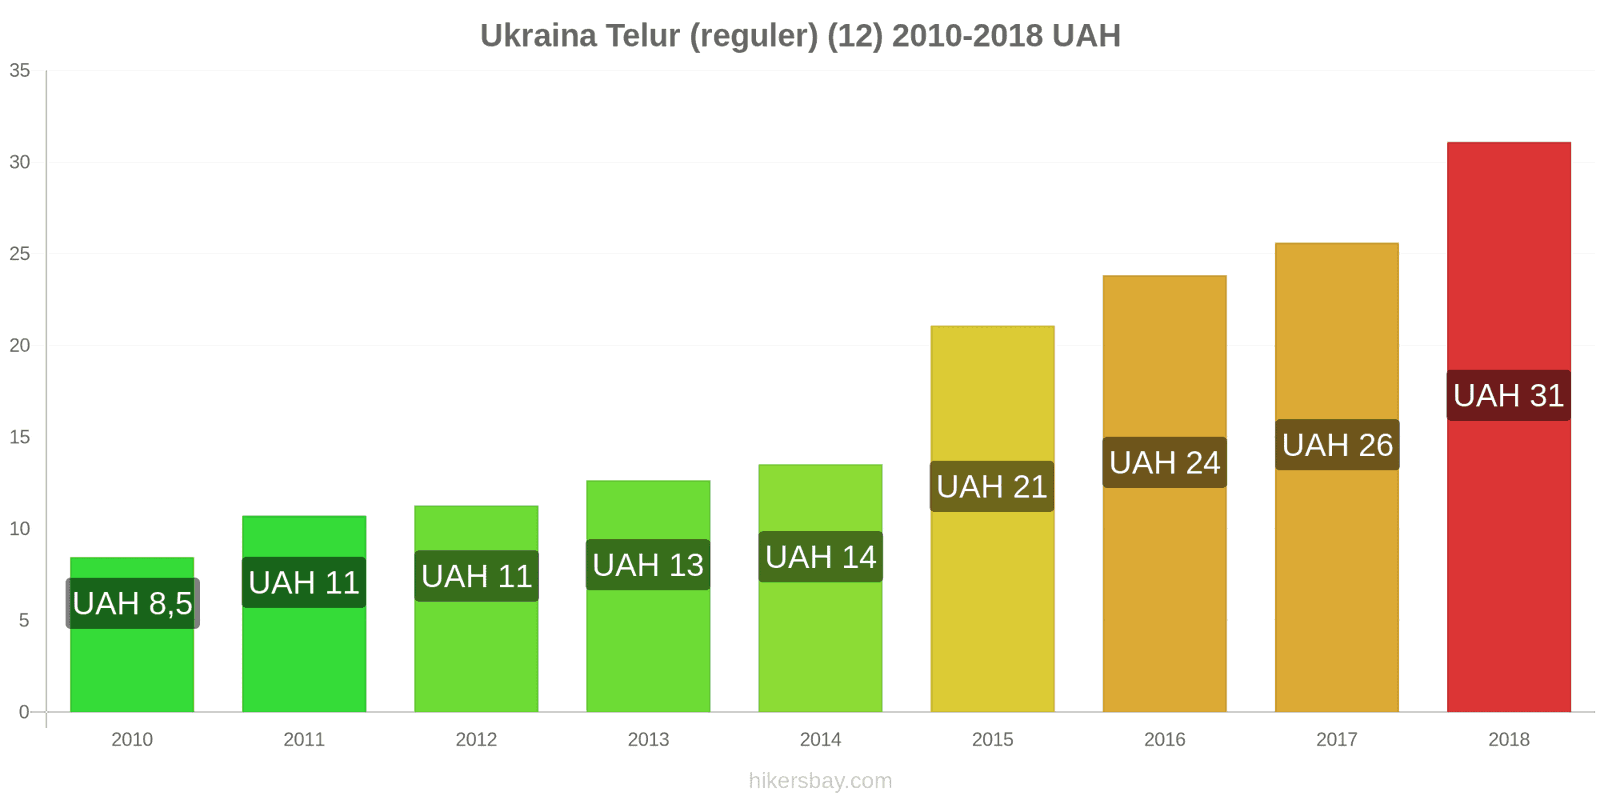 Ukraina perubahan harga Telur (biasa) (12) hikersbay.com